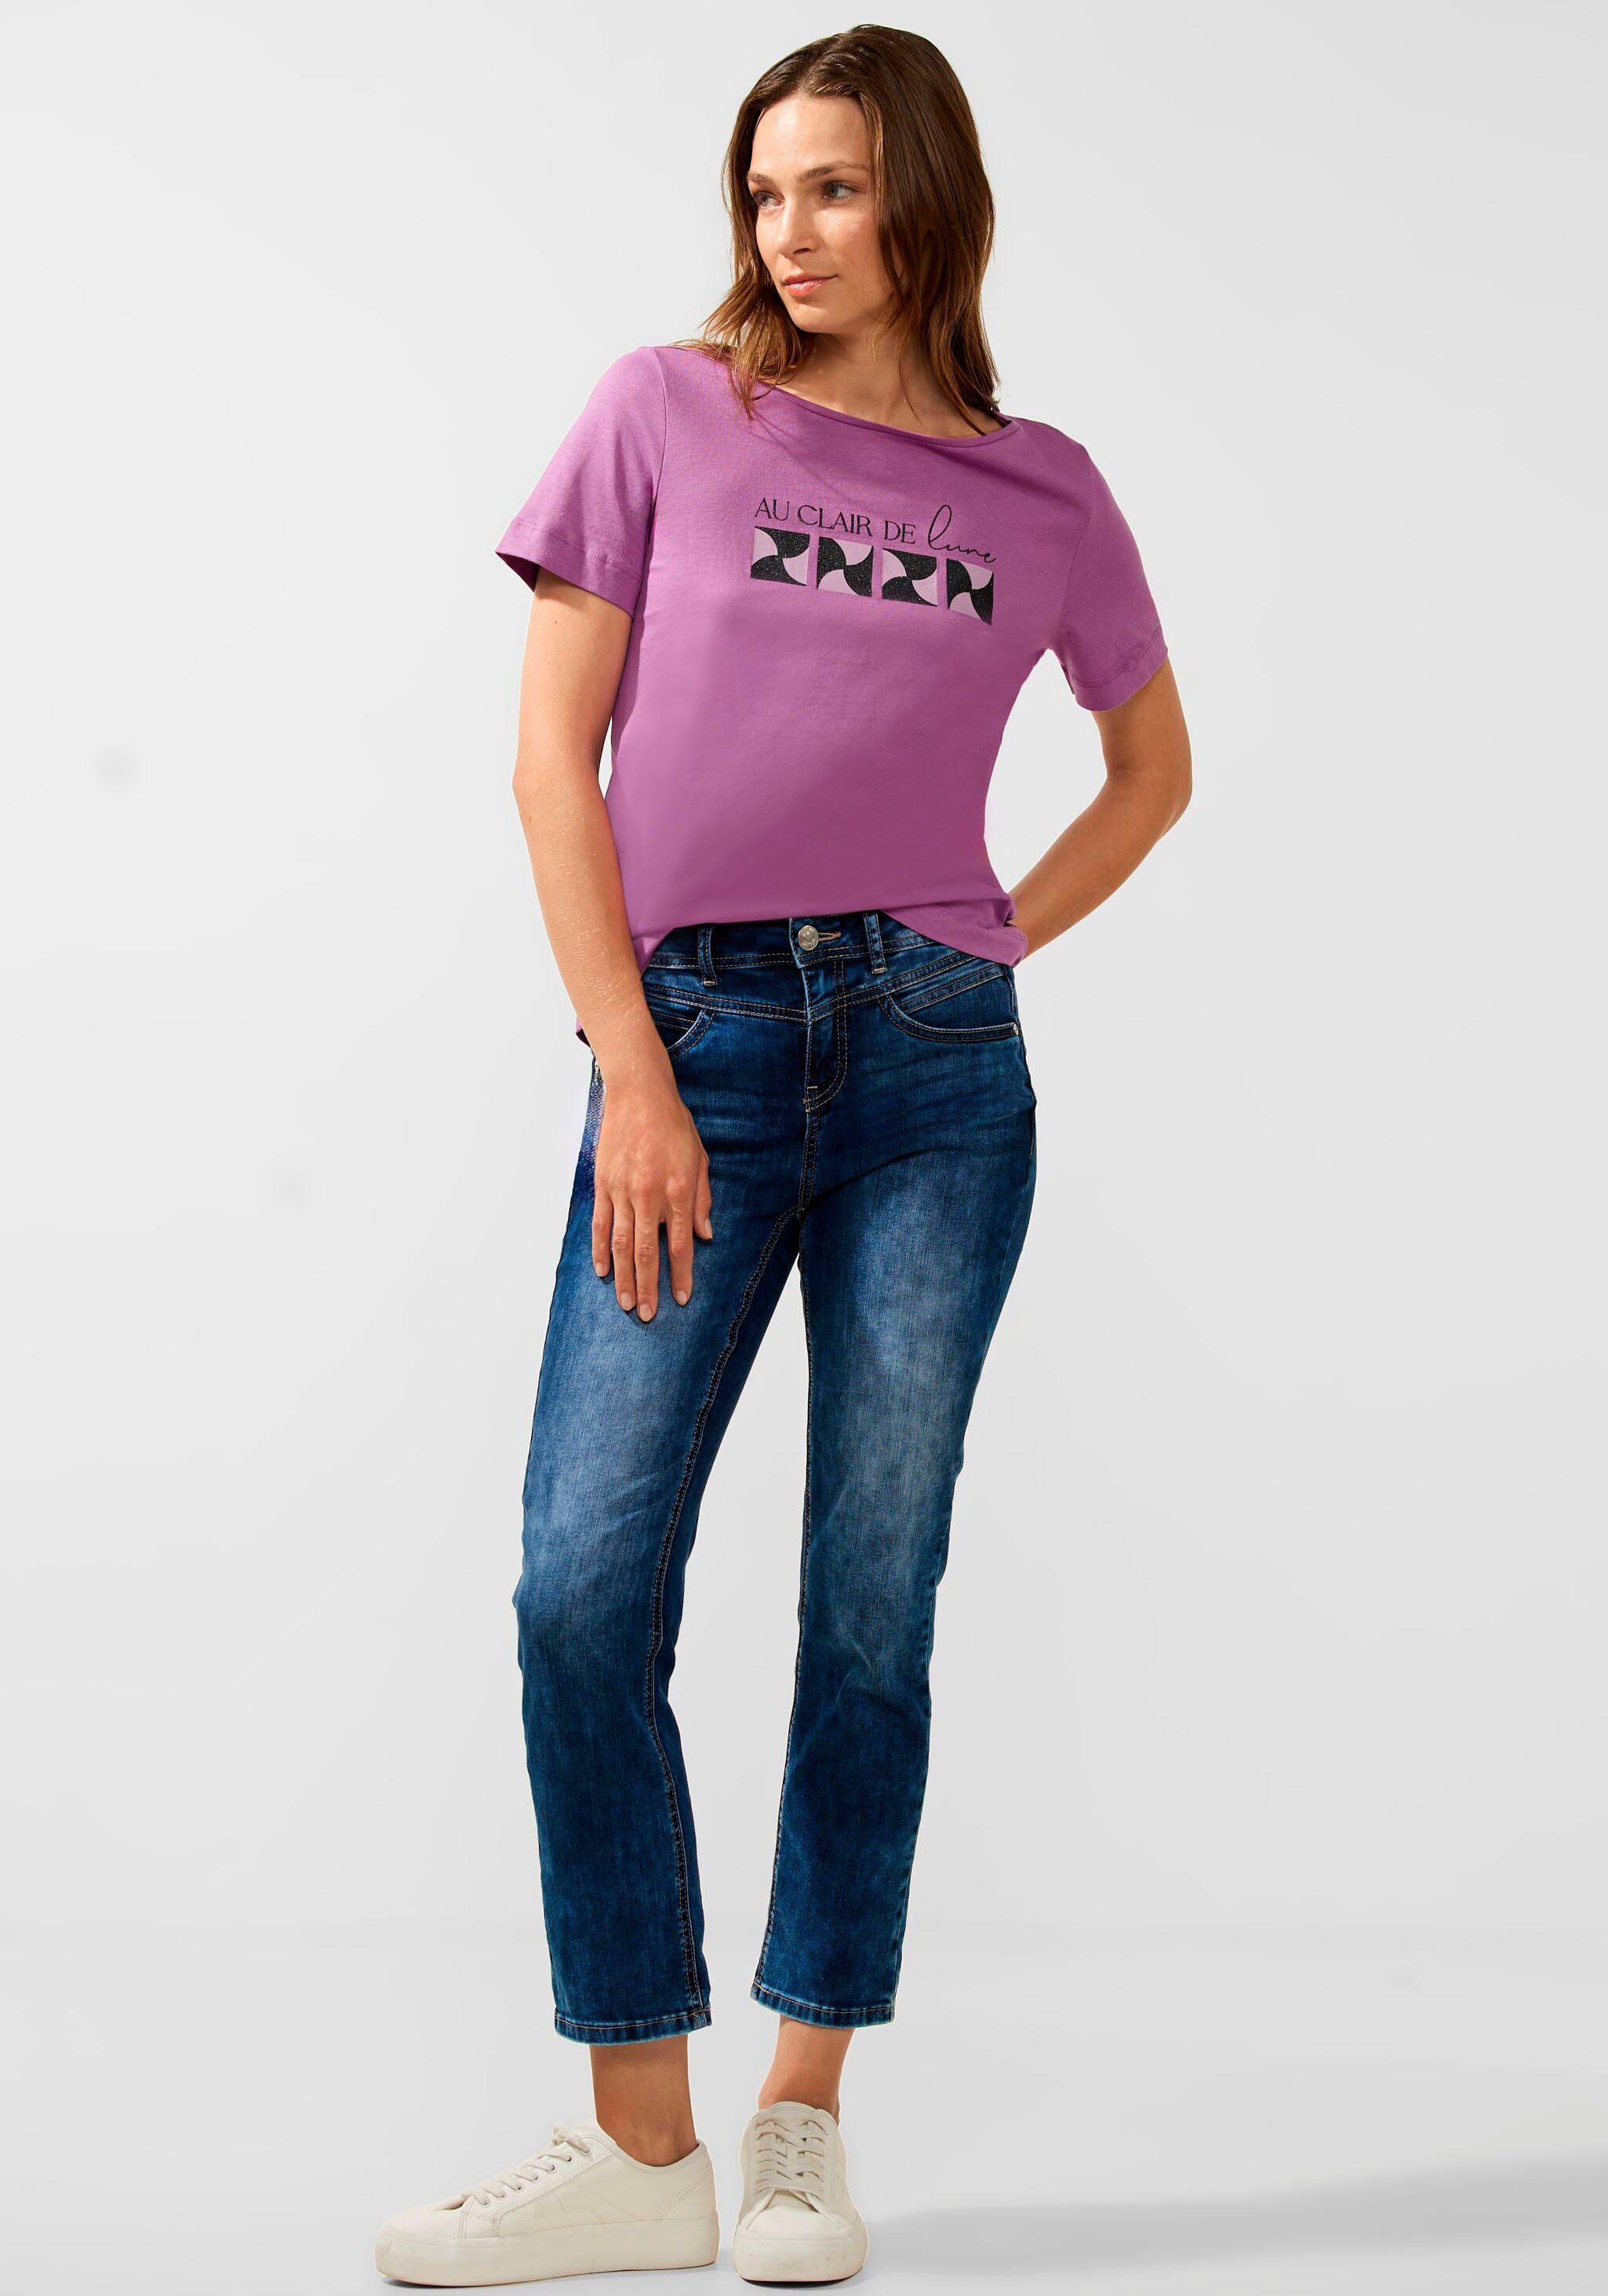 Rundhalsausschnitt T-Shirt mit ONE meta STREET lilac